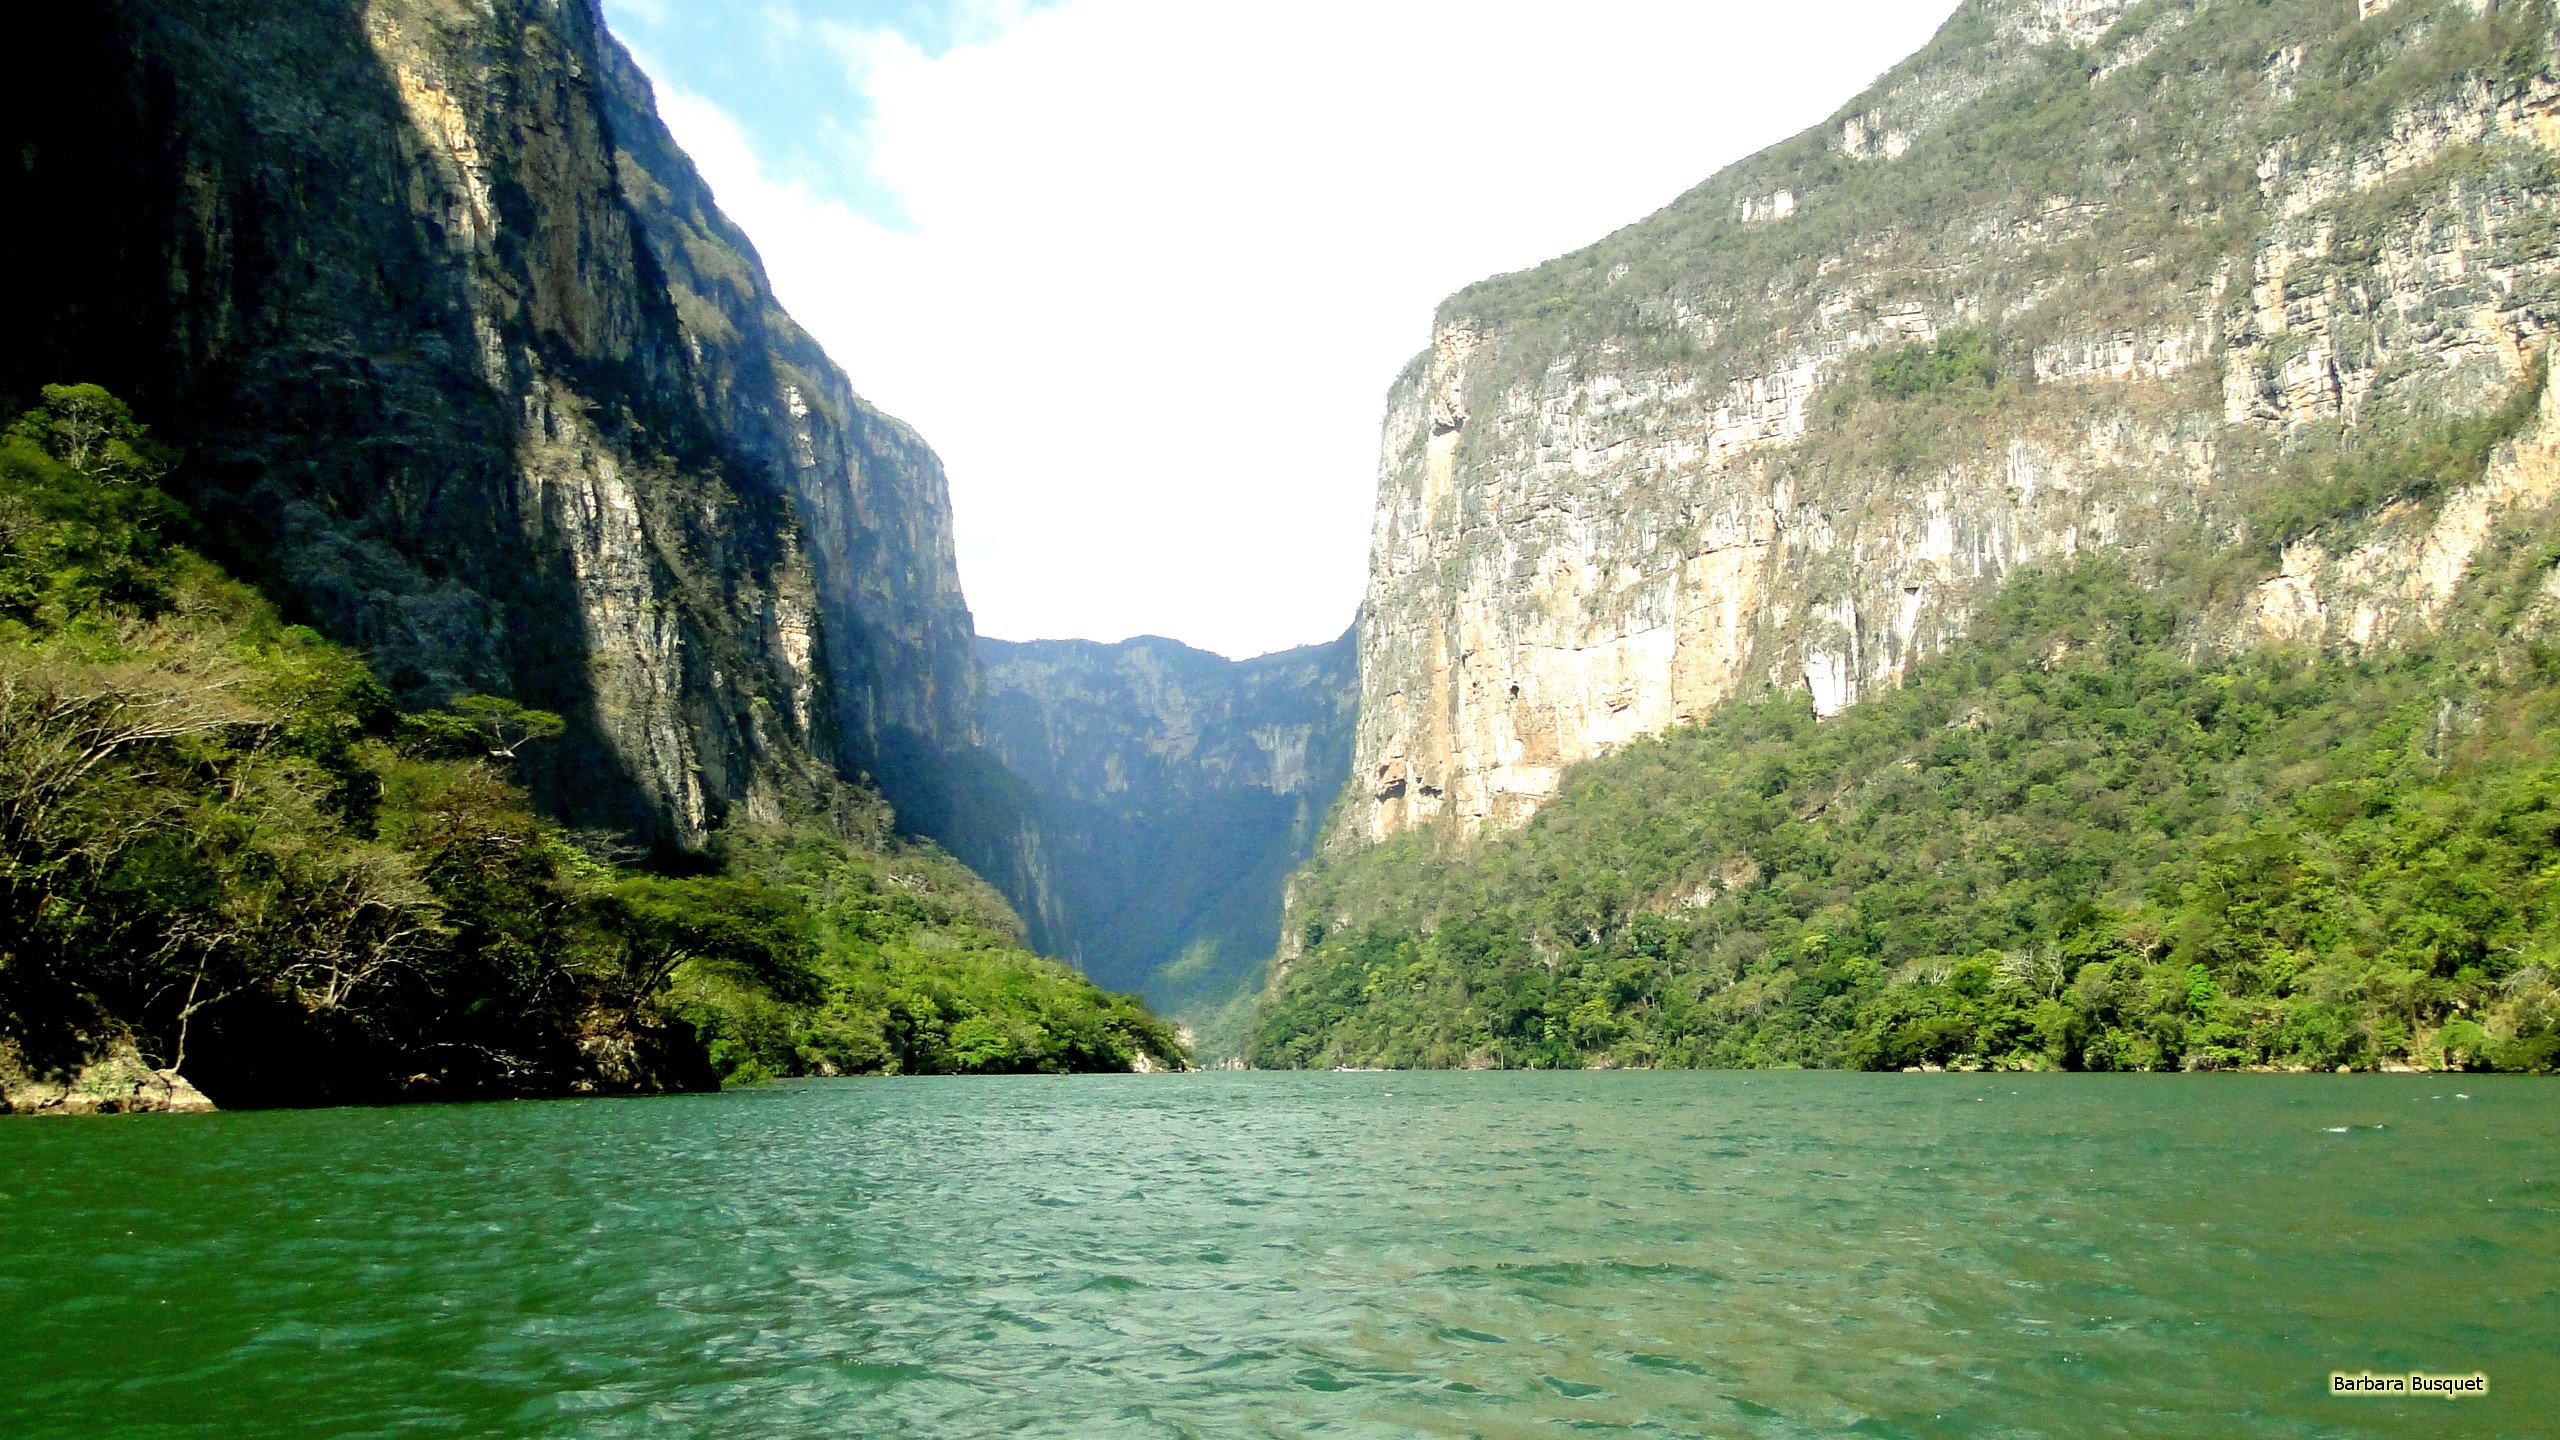 Sumidero Canyon in Mexico HD Wallpaper